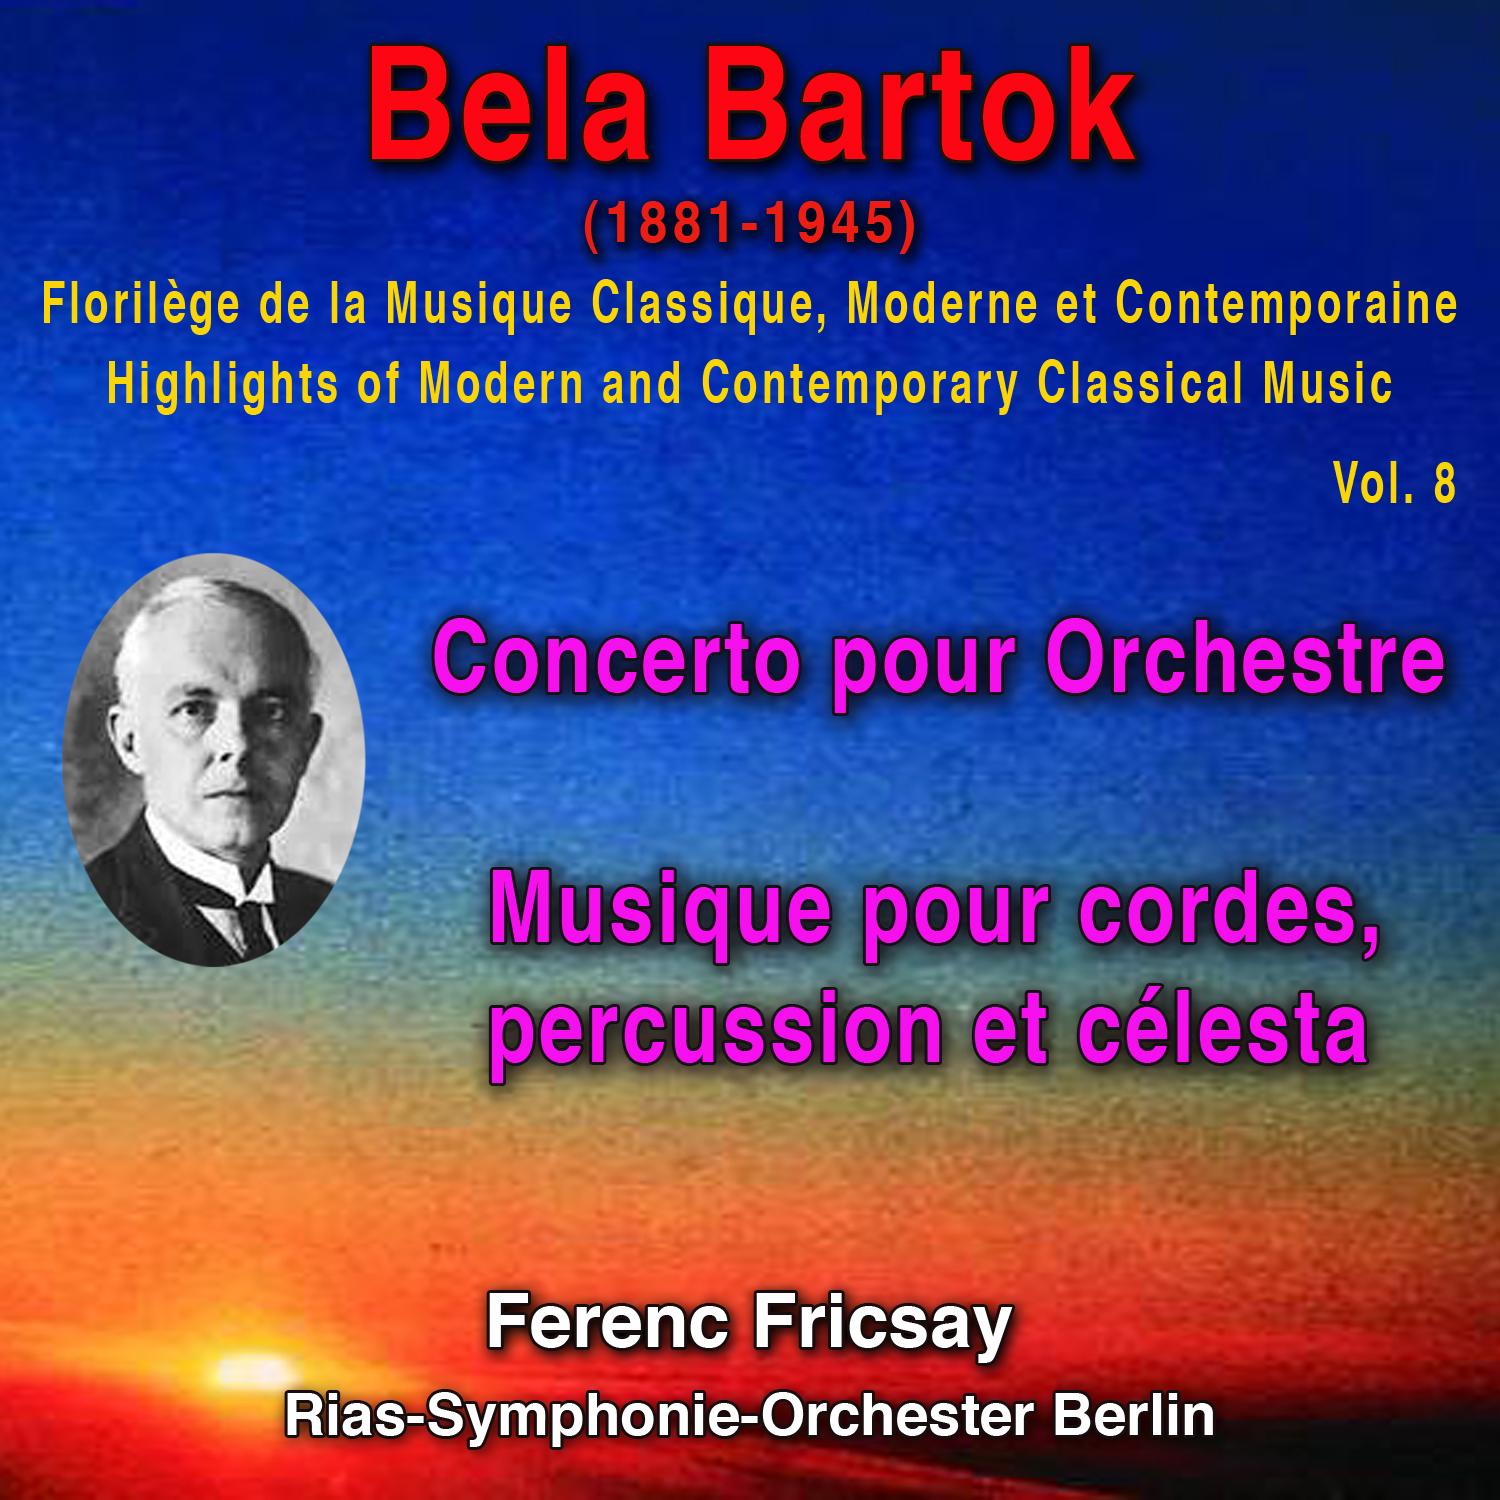 Bela Bartok  Florile ge de la Musique Classique Moderne et Contemporaine  Highlights of Modern and Contemporary Classical Music  Vol. 8